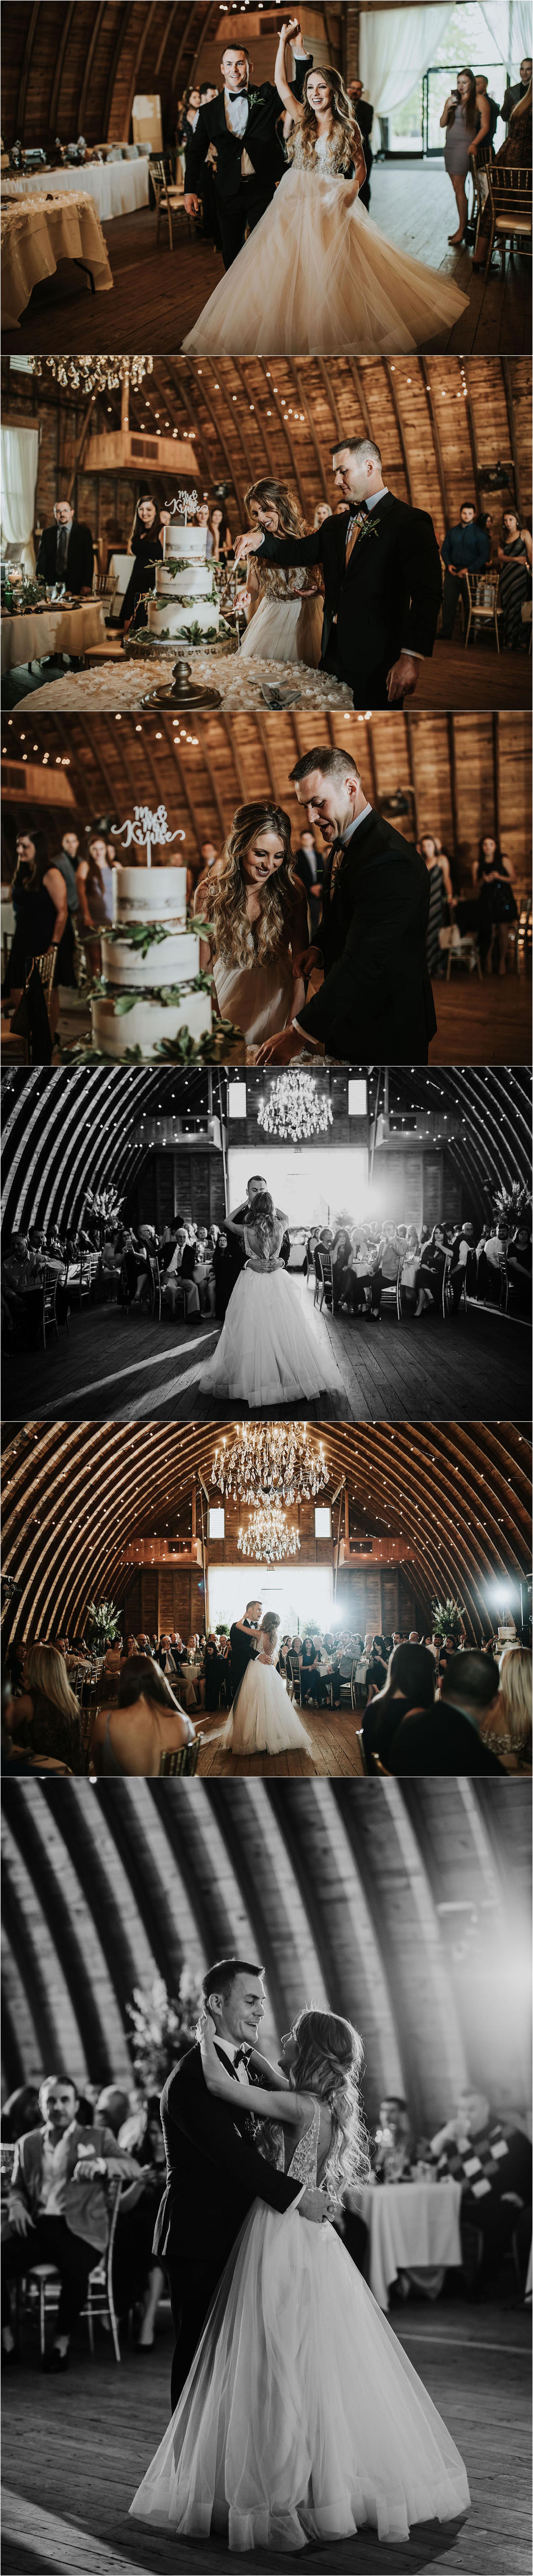 14 pittsburgh wedding videographer.jpg